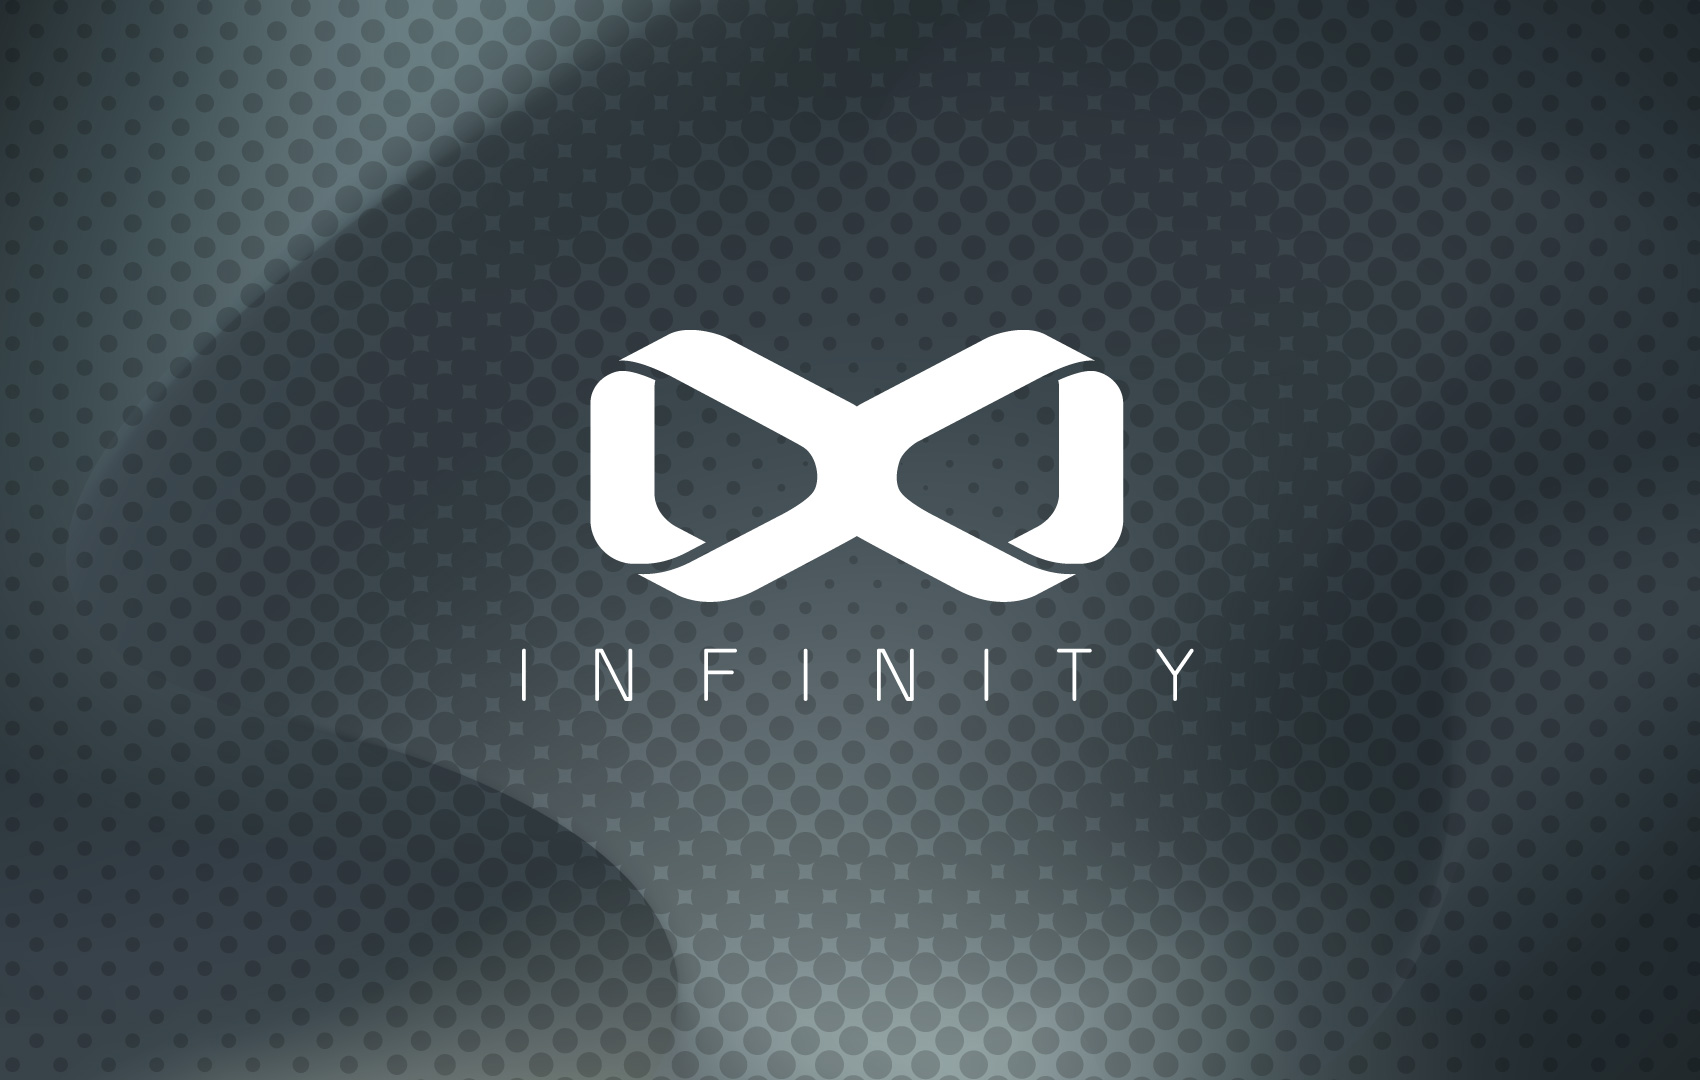 hibriden logotype design for Infinity